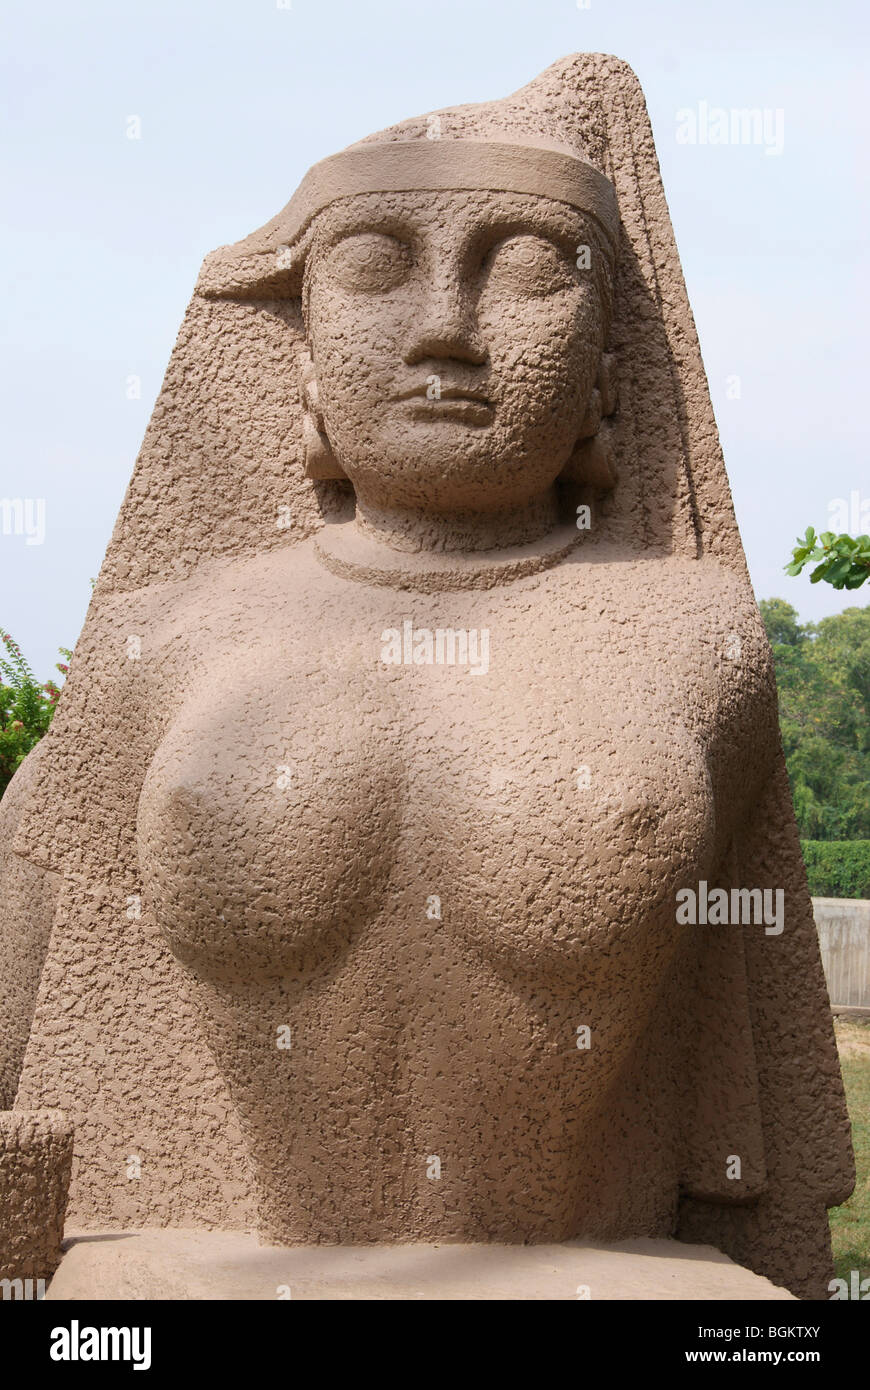 Kerala new woman full naked image